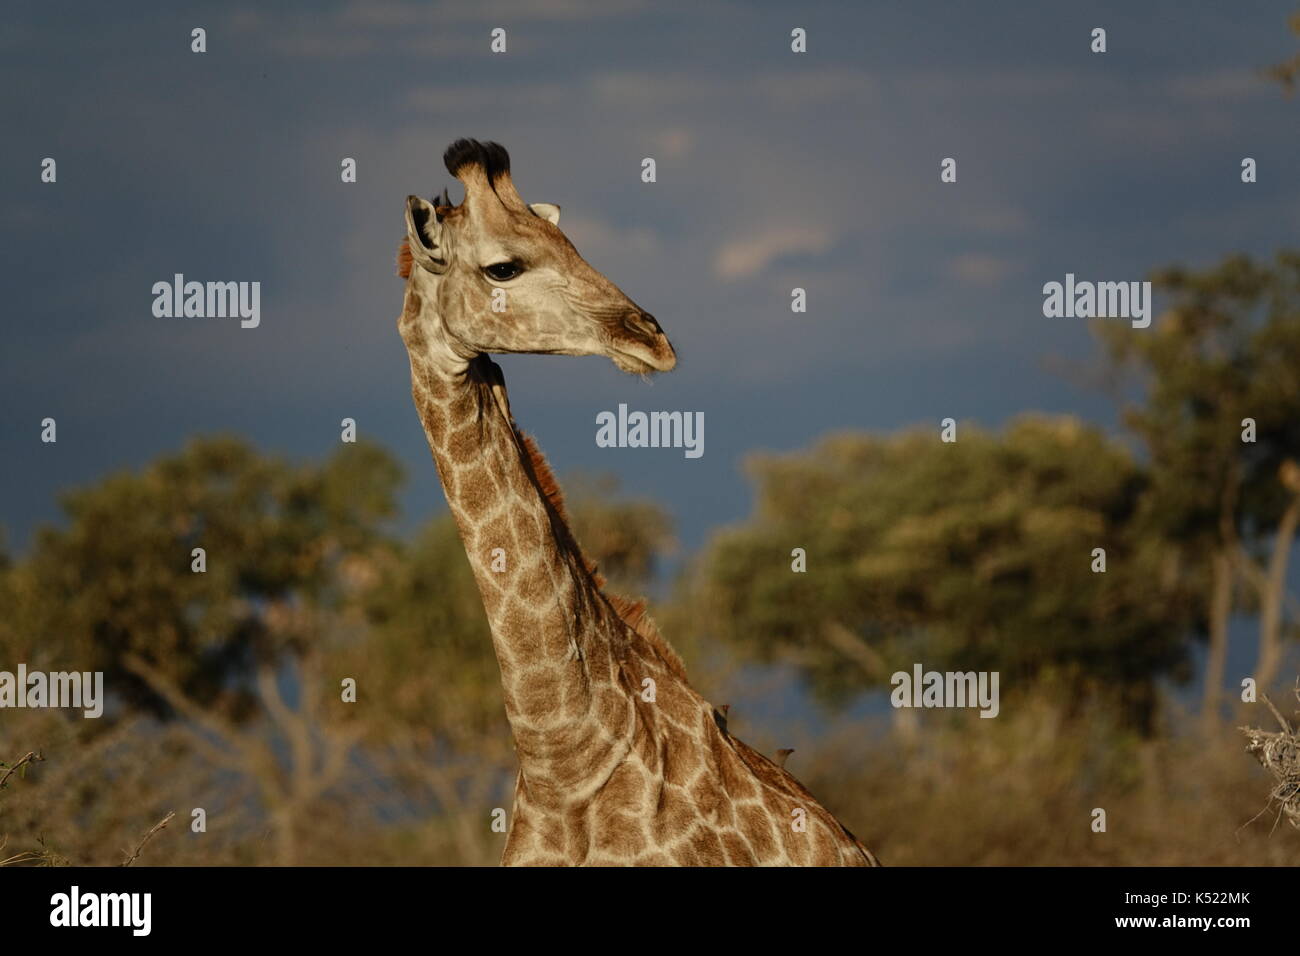 Giraffe head looking away Stock Photo